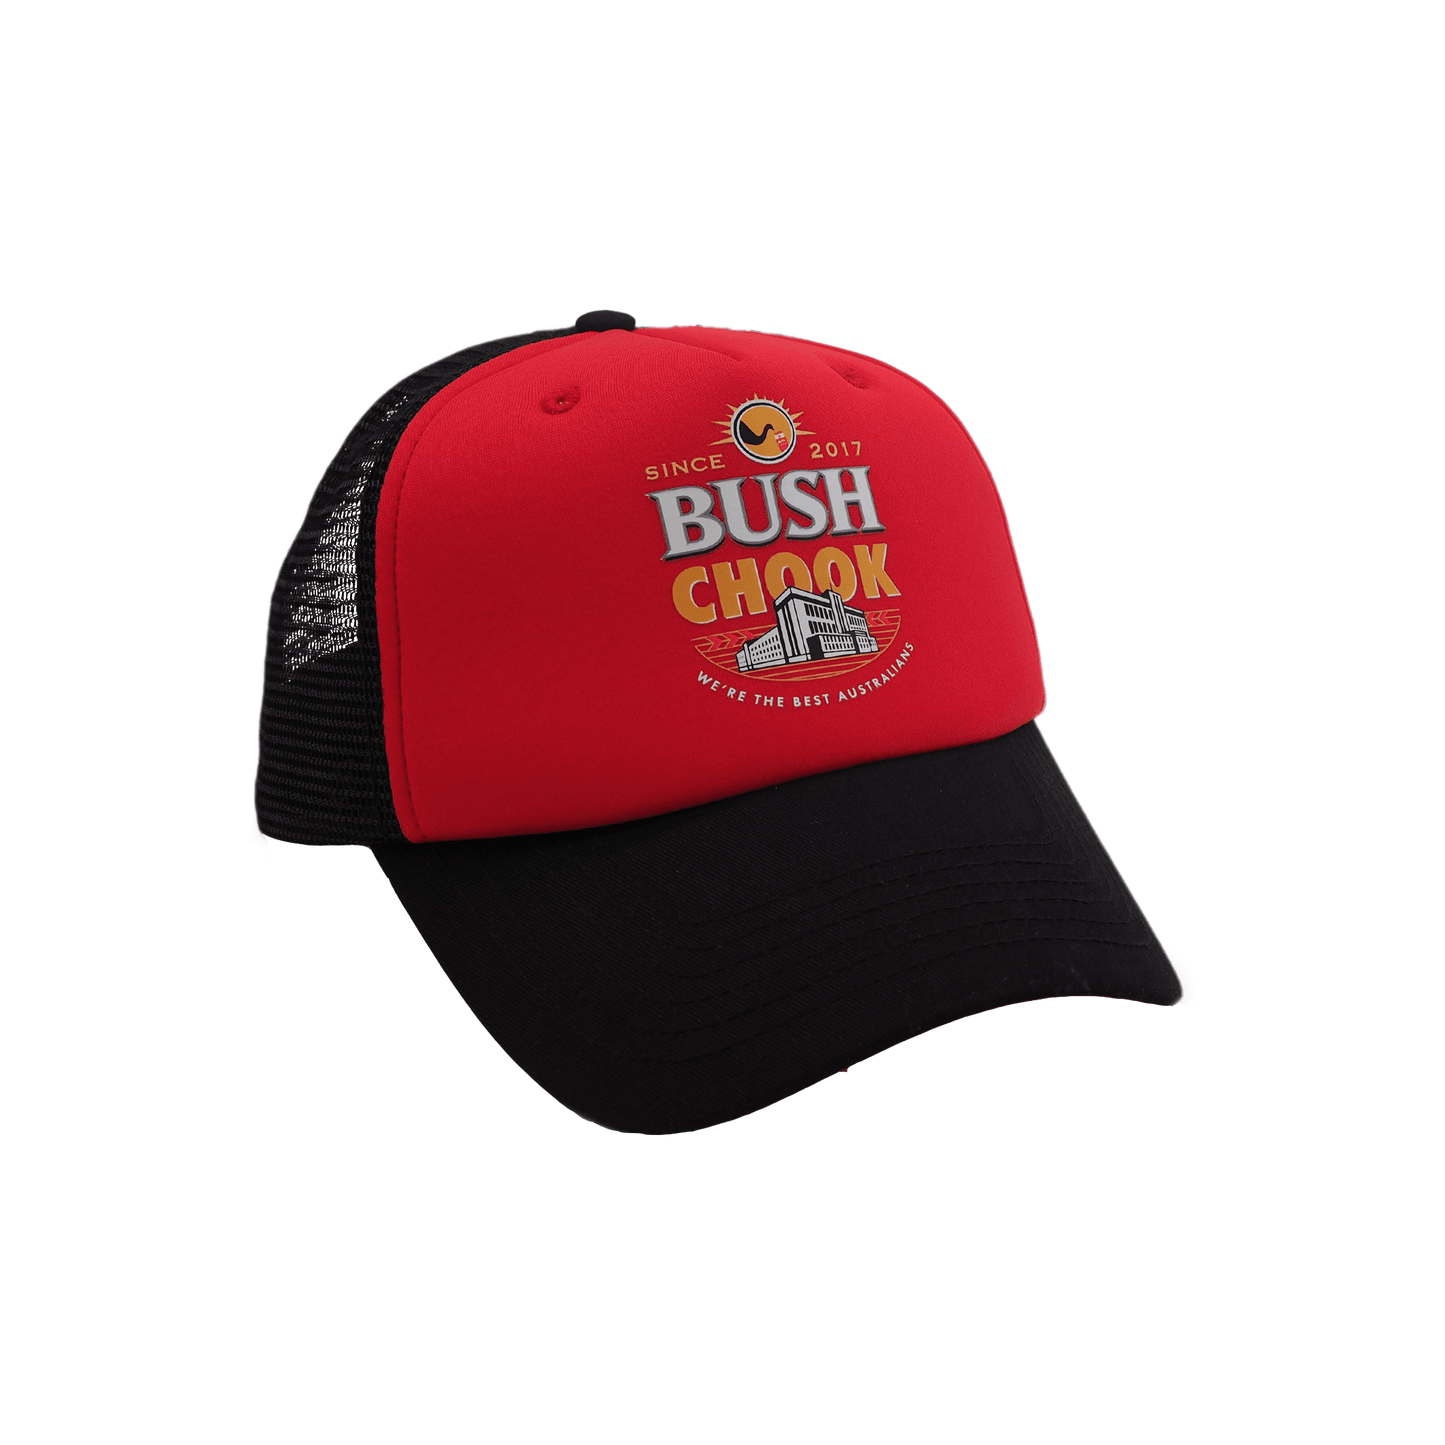 Bush Chook Trucker - Red